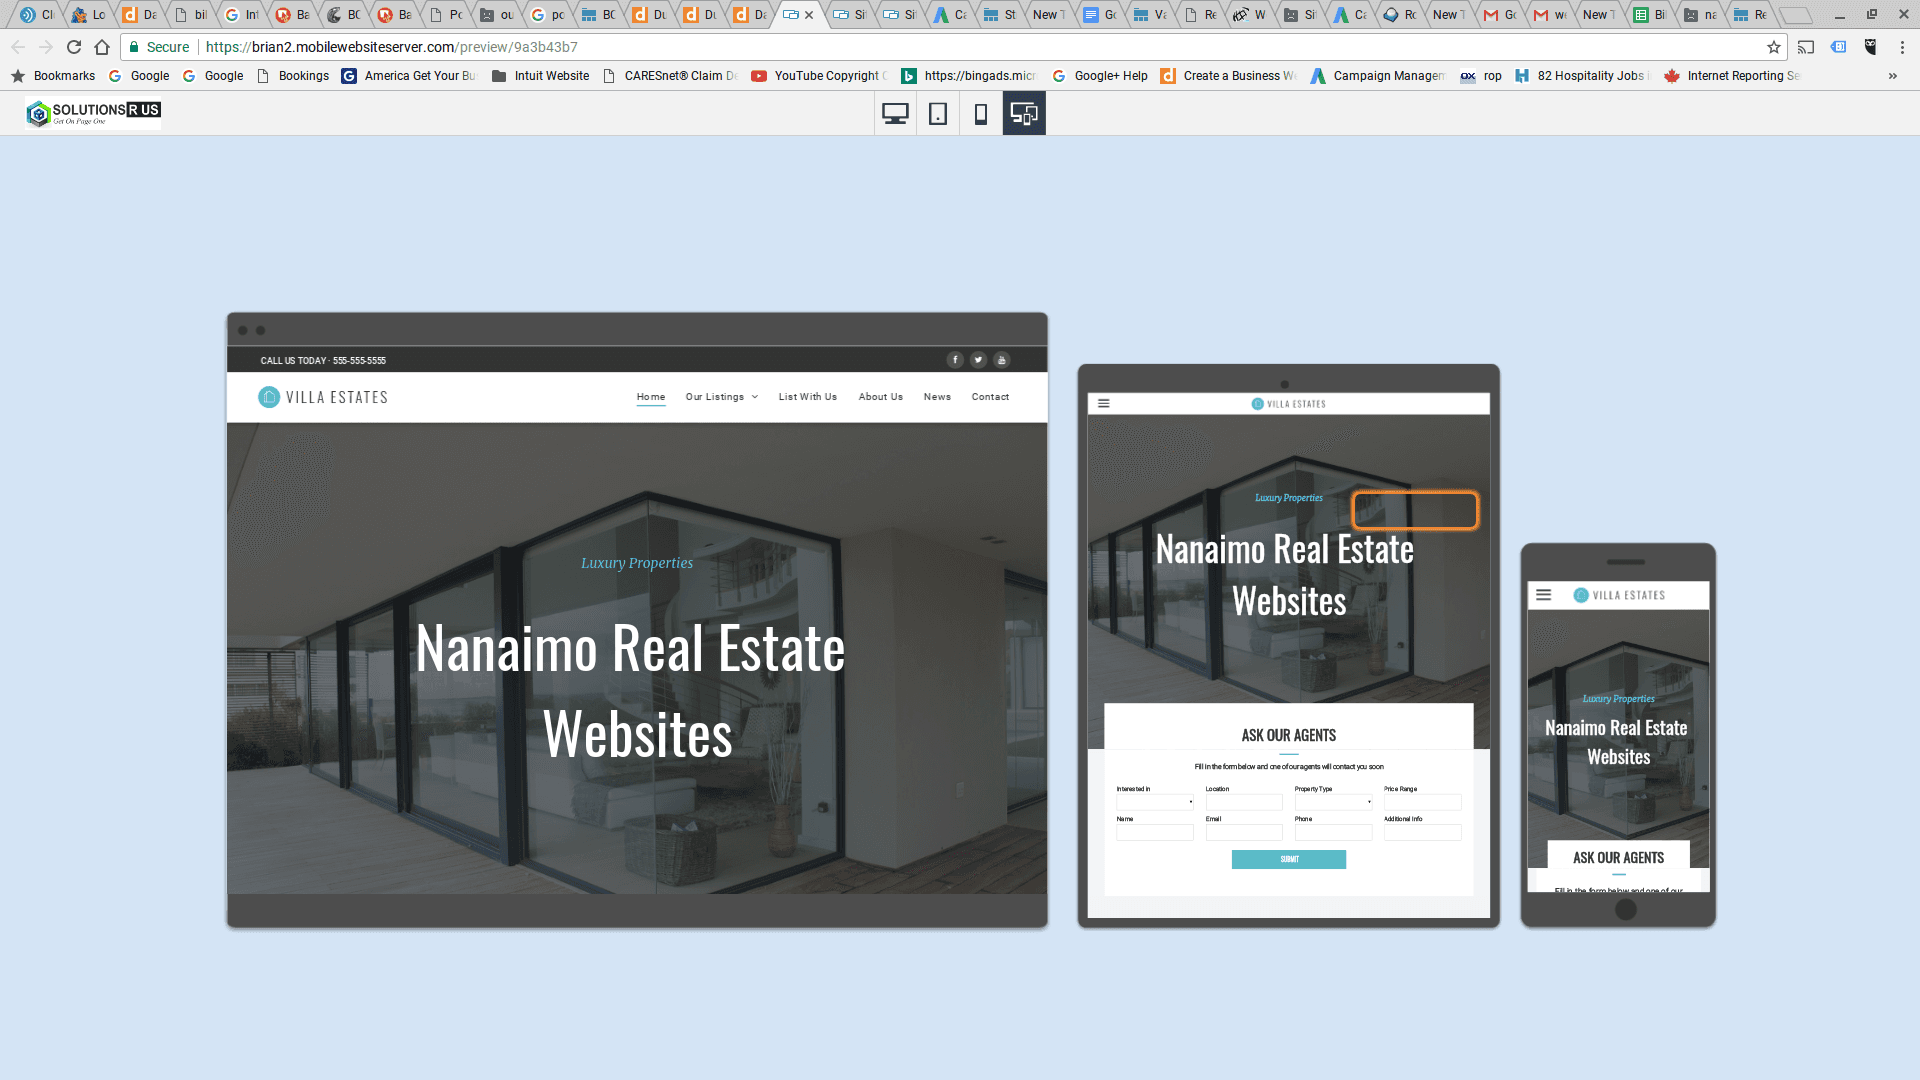 Nanaimo Real Estate Websites